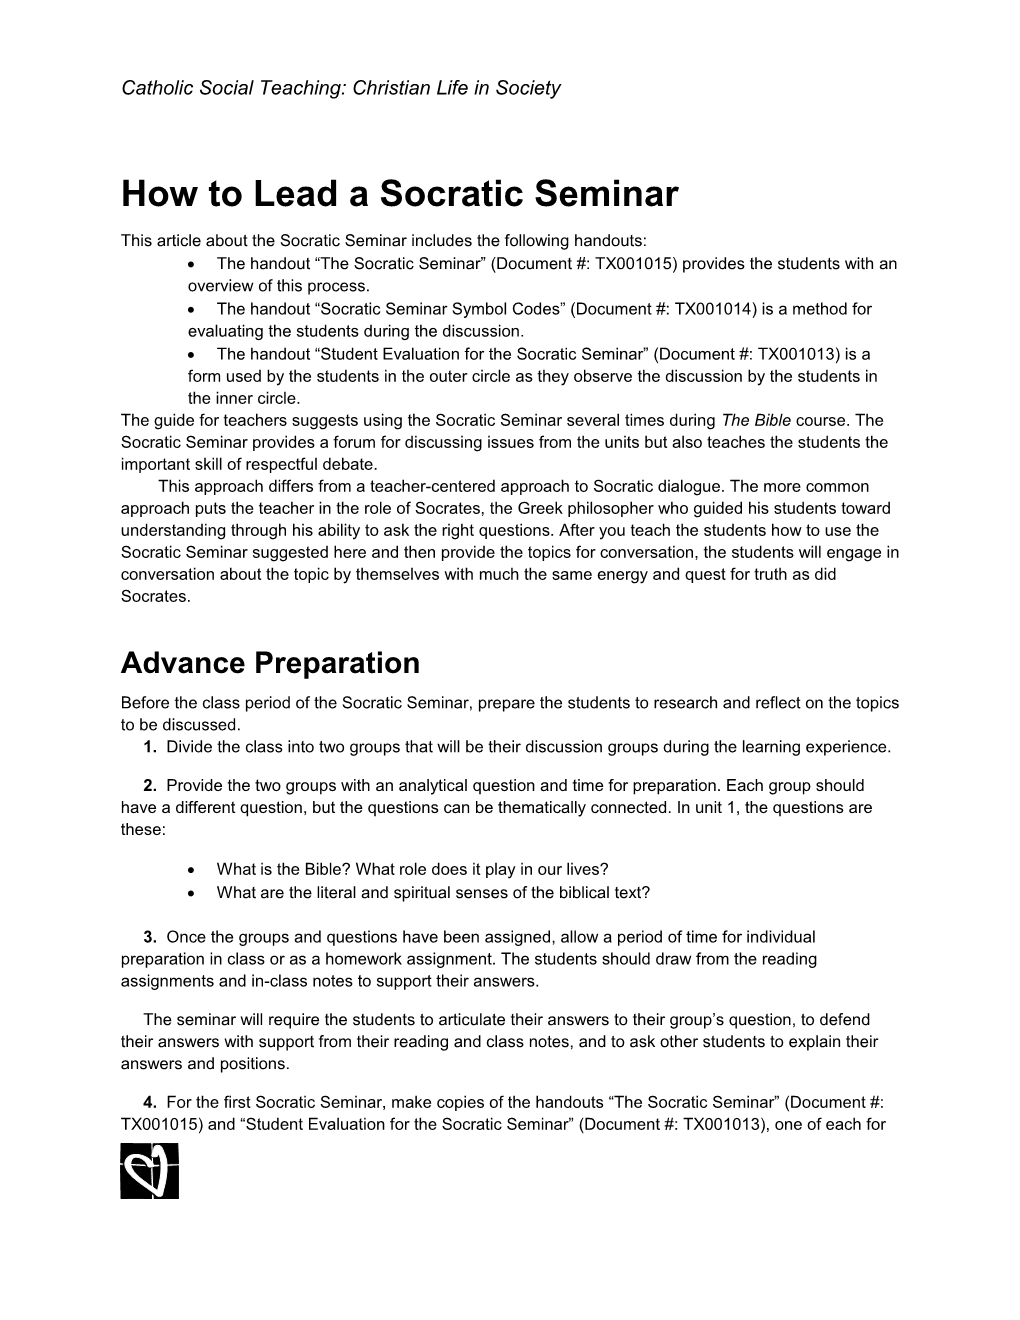 How to Lead a Socratic Seminar